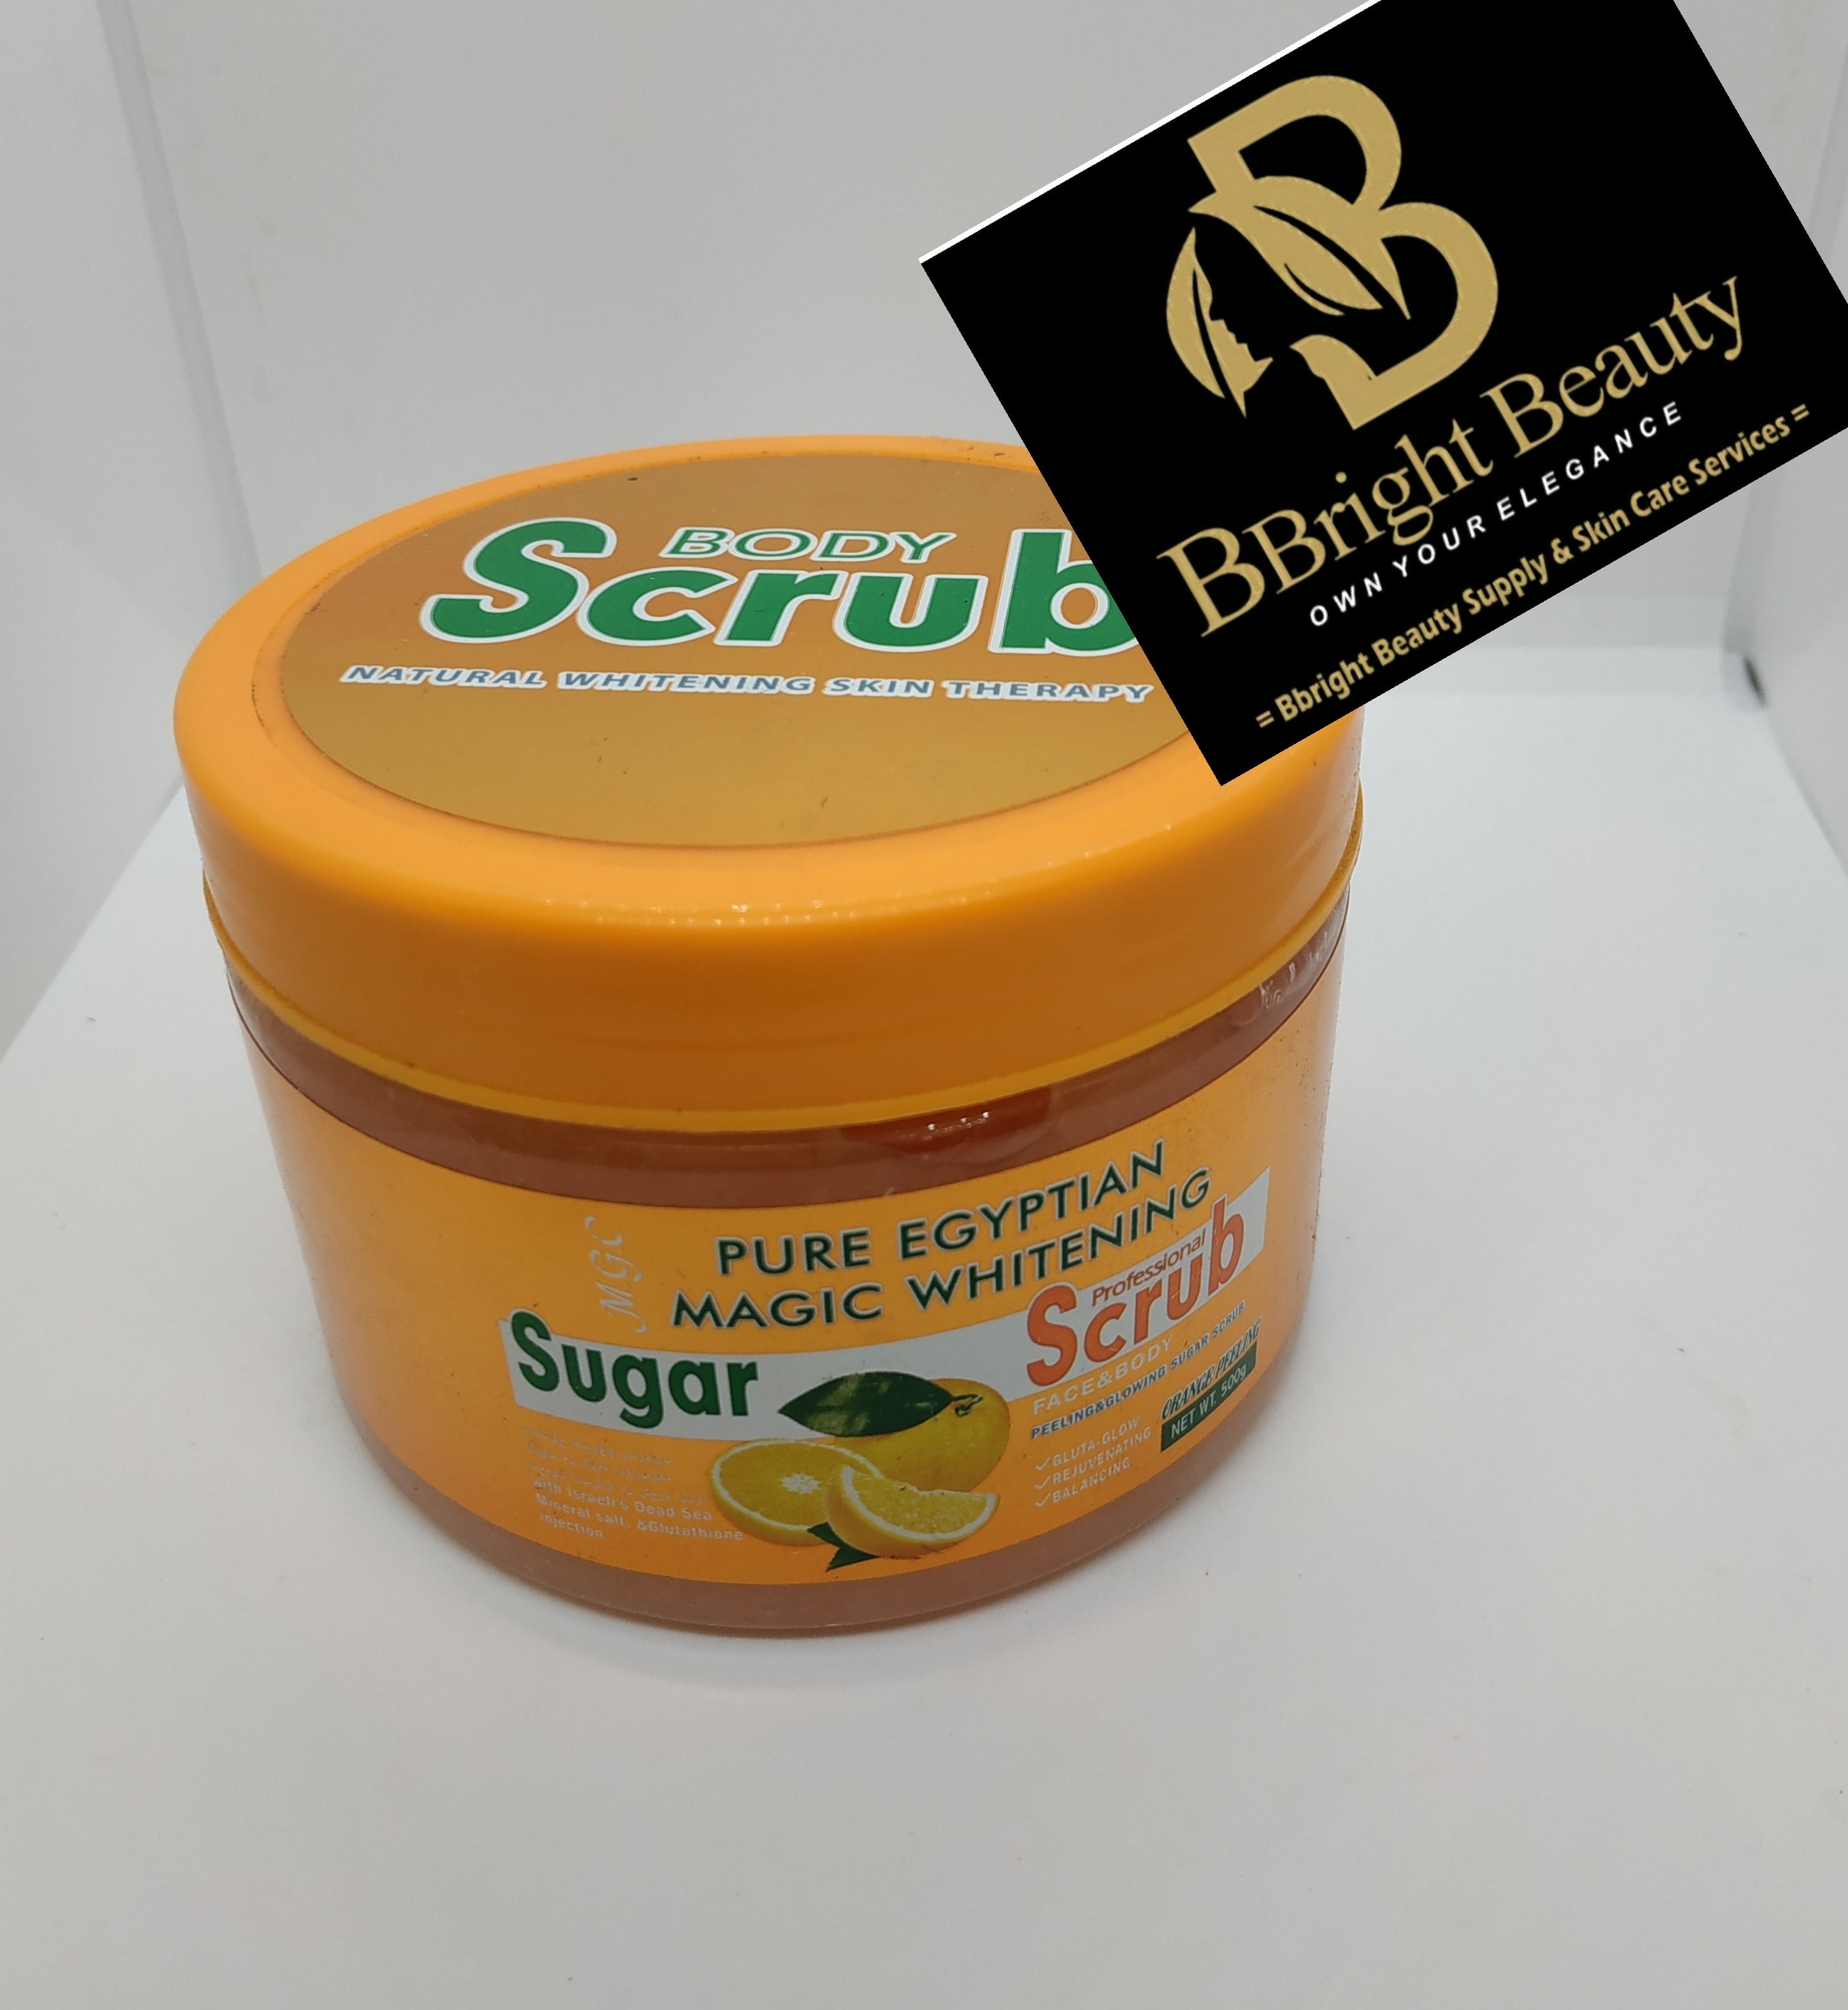 Pure Egyptian magic whitening orange sugar scrub 500g